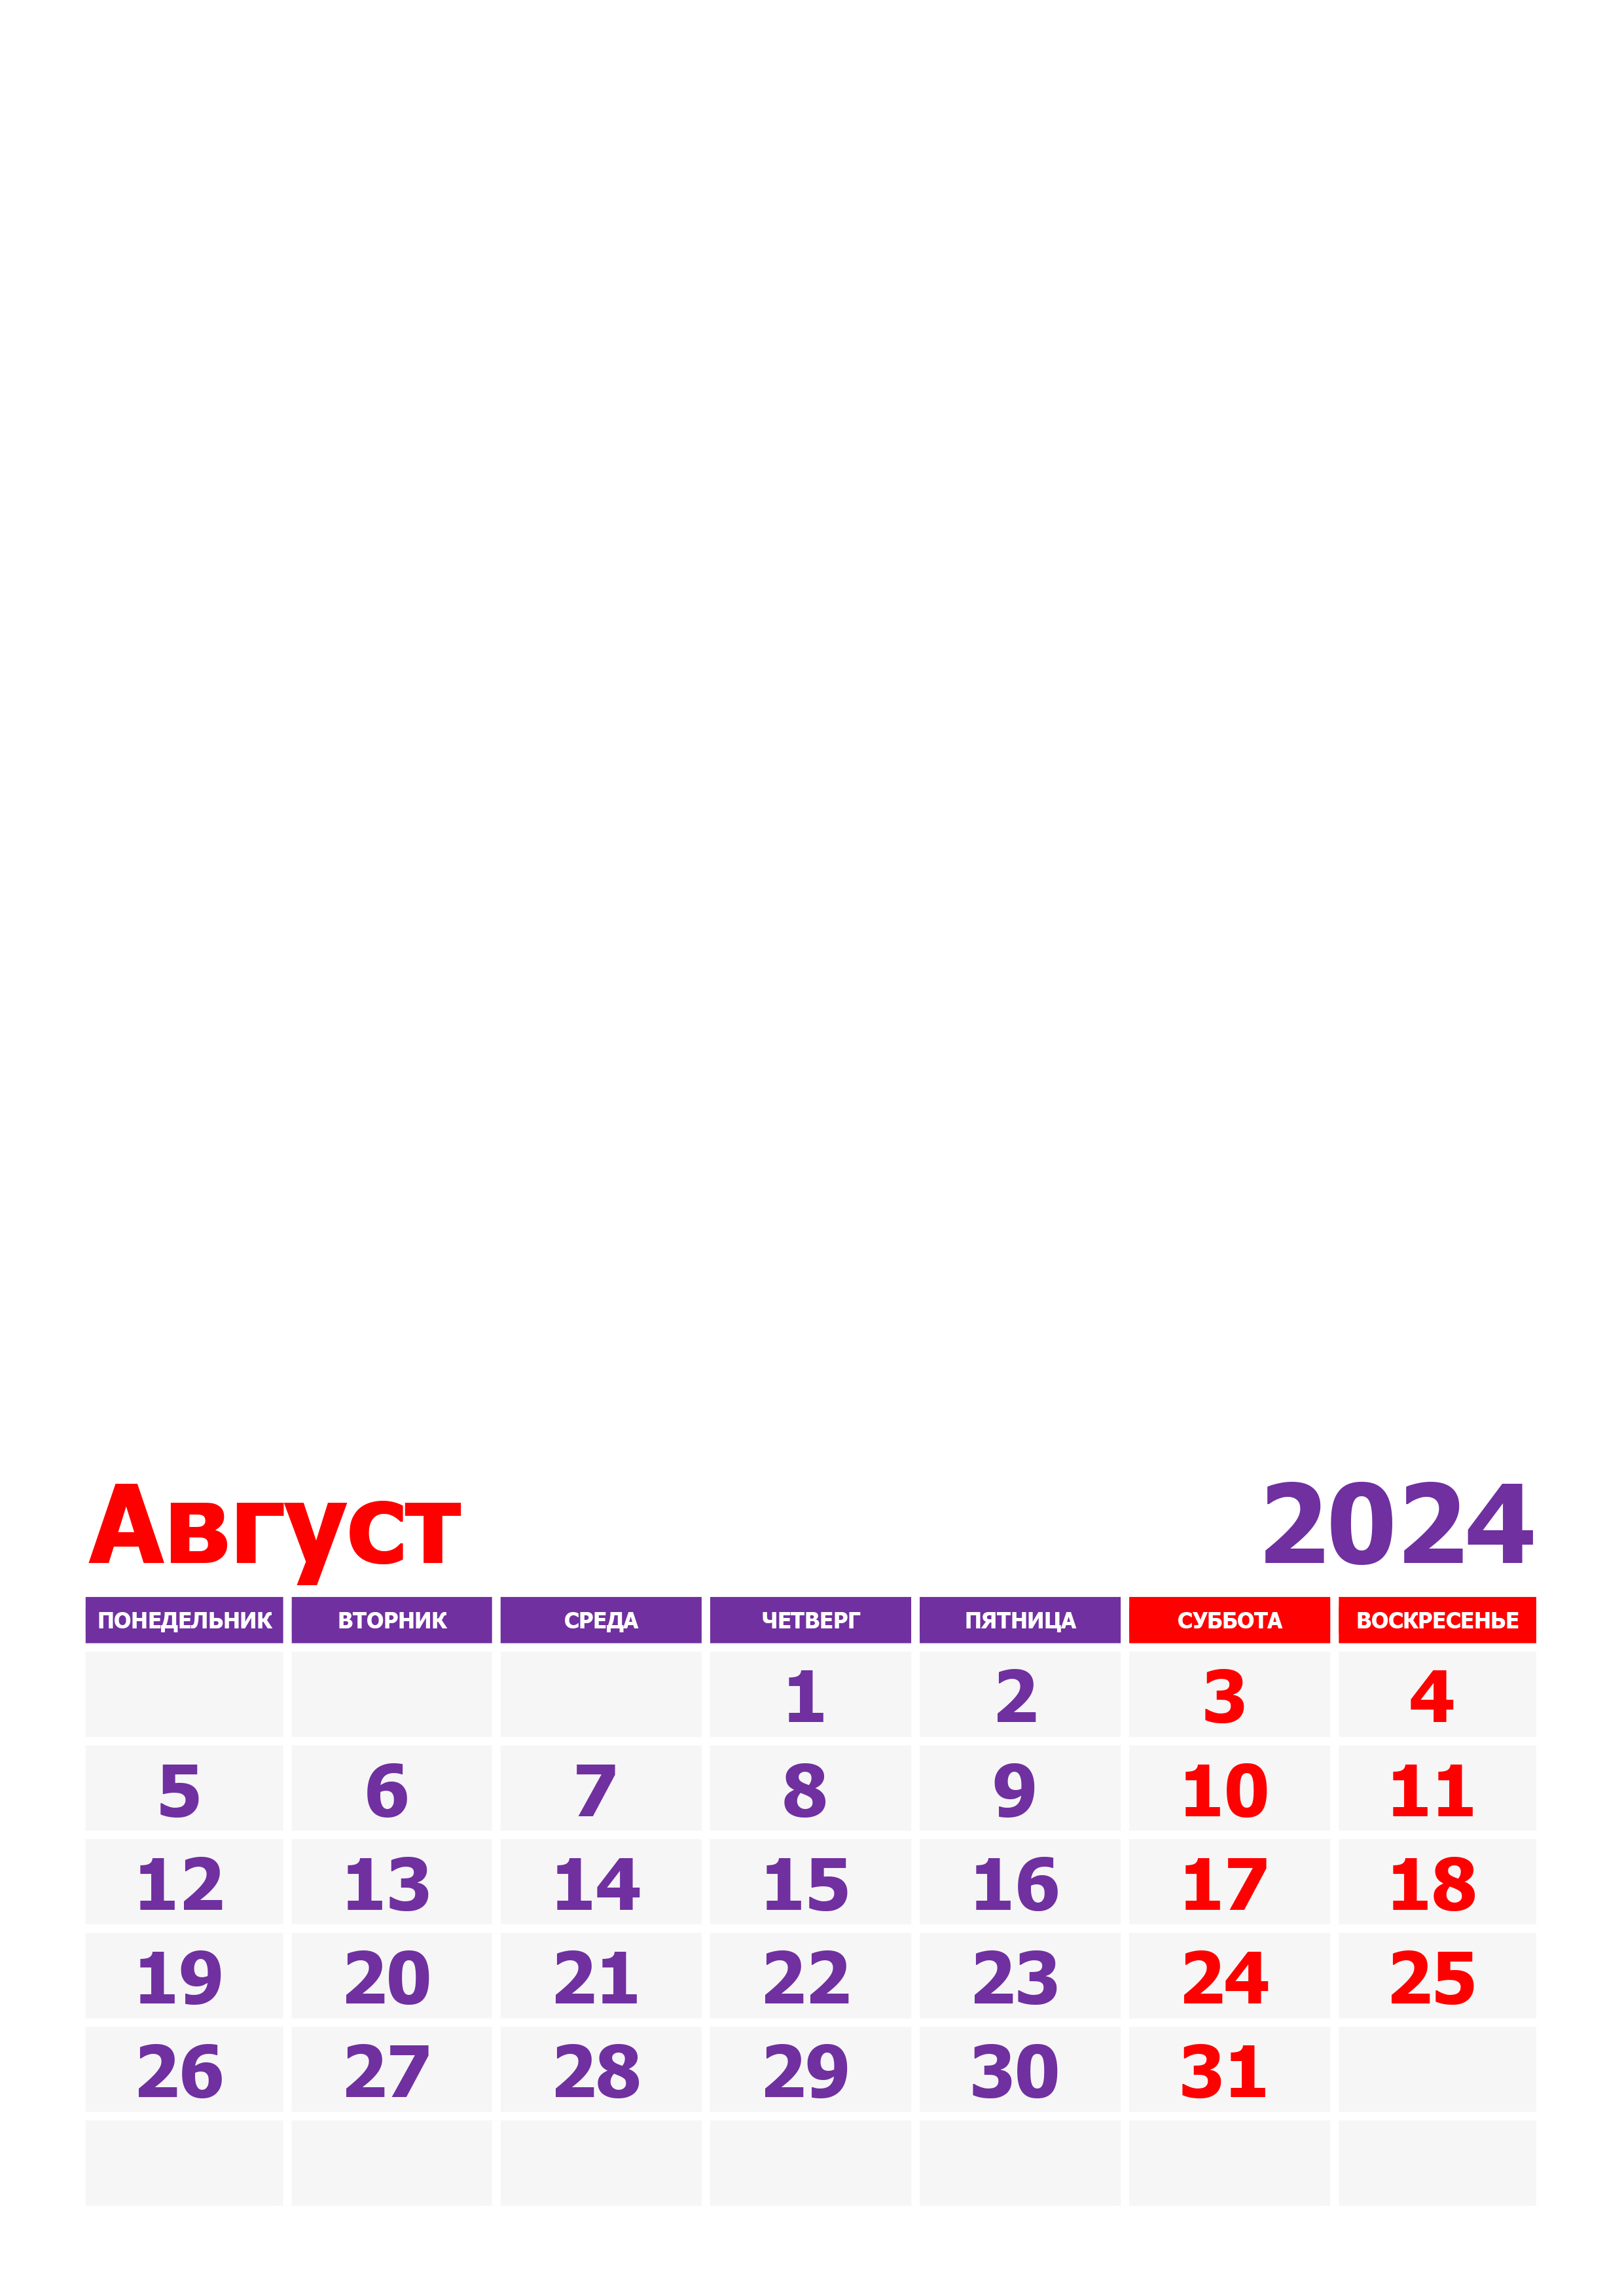 Сколько дней до 17 августа 2024. Календарь август 2024. Календарь на август 2024 года. Календарь июль август 2024. Производственный календарь на август 2024.